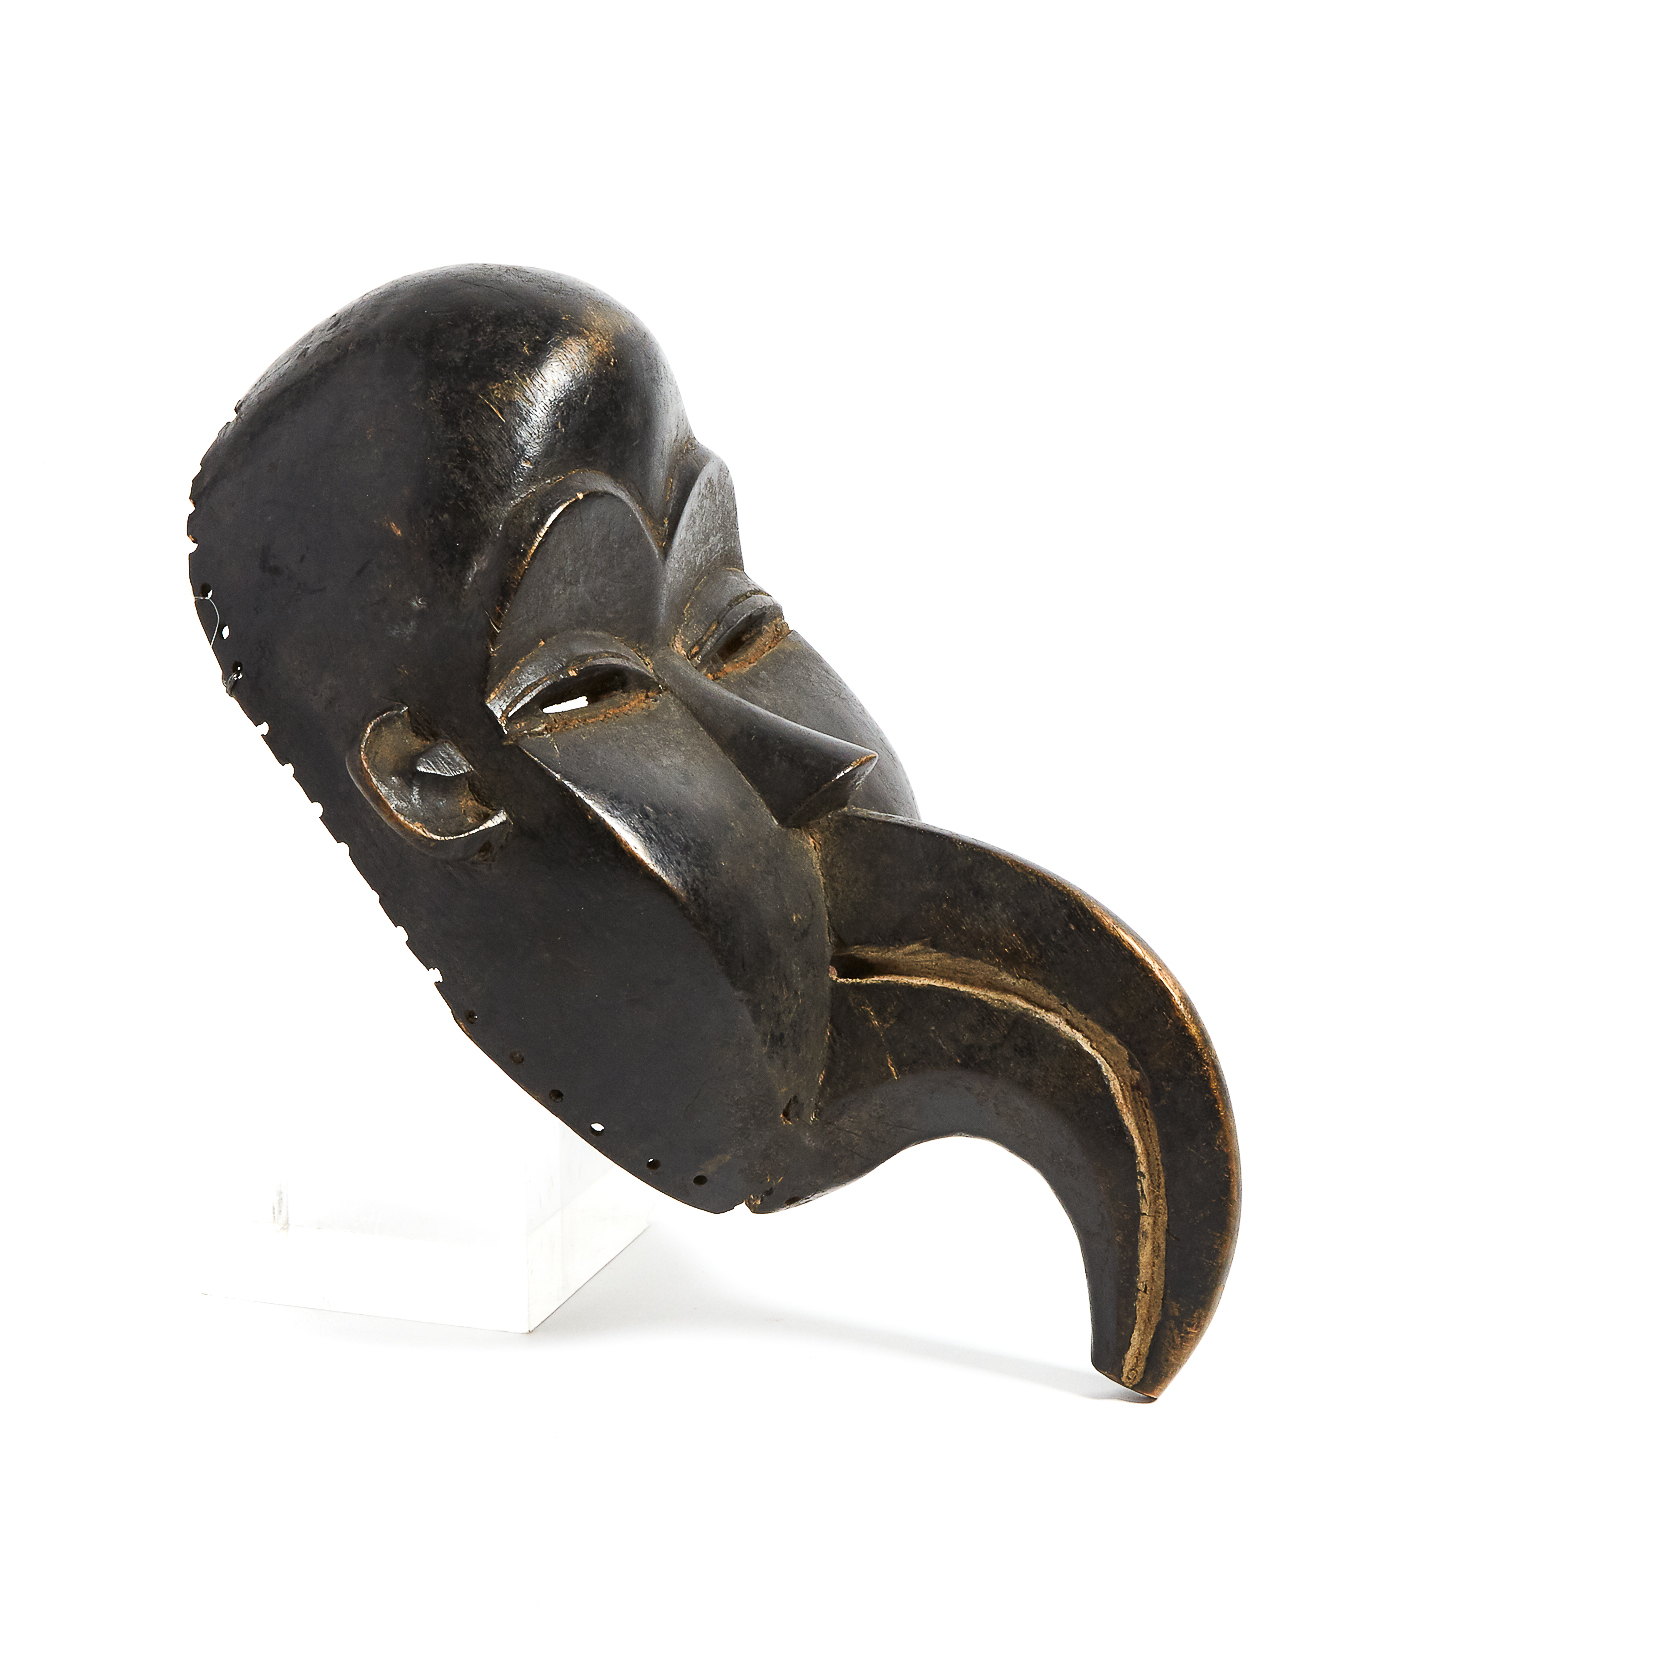 Dan Anthropo-zoomorphic Mask, Ivory Coast/ Liberia, West Africa